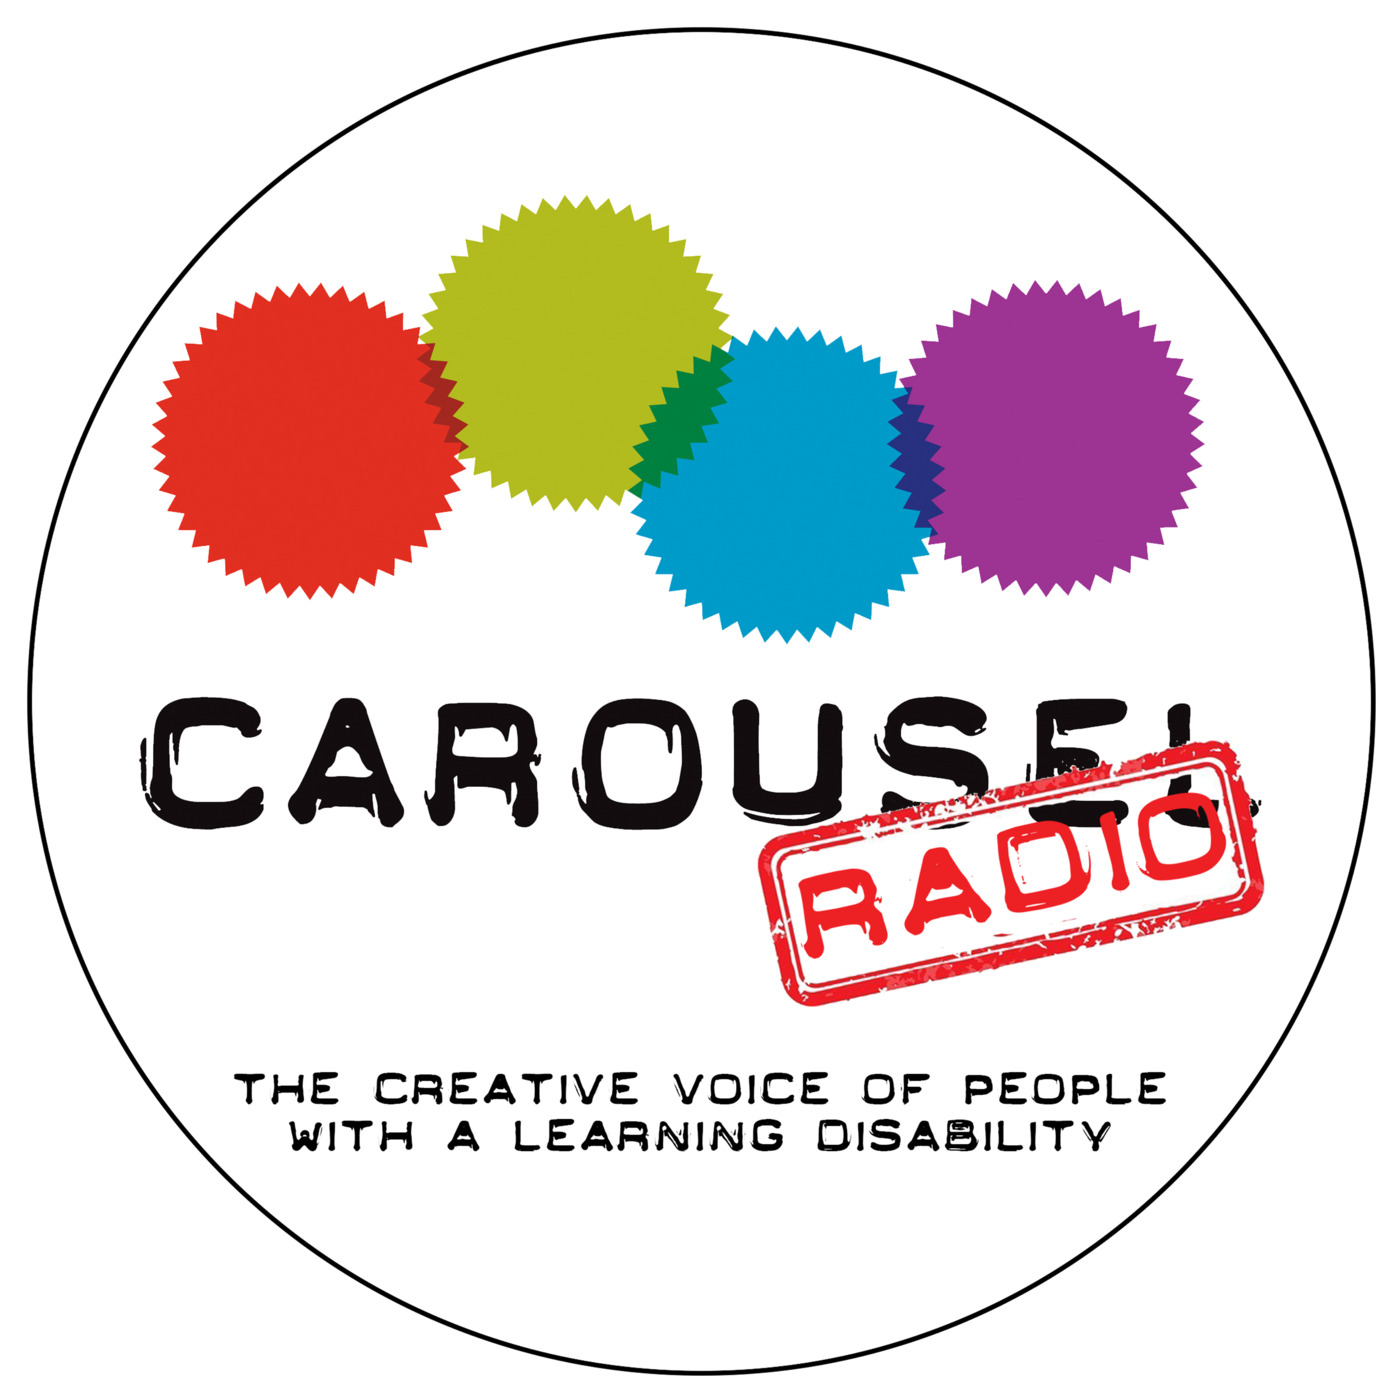 Carousel Radio January 2020